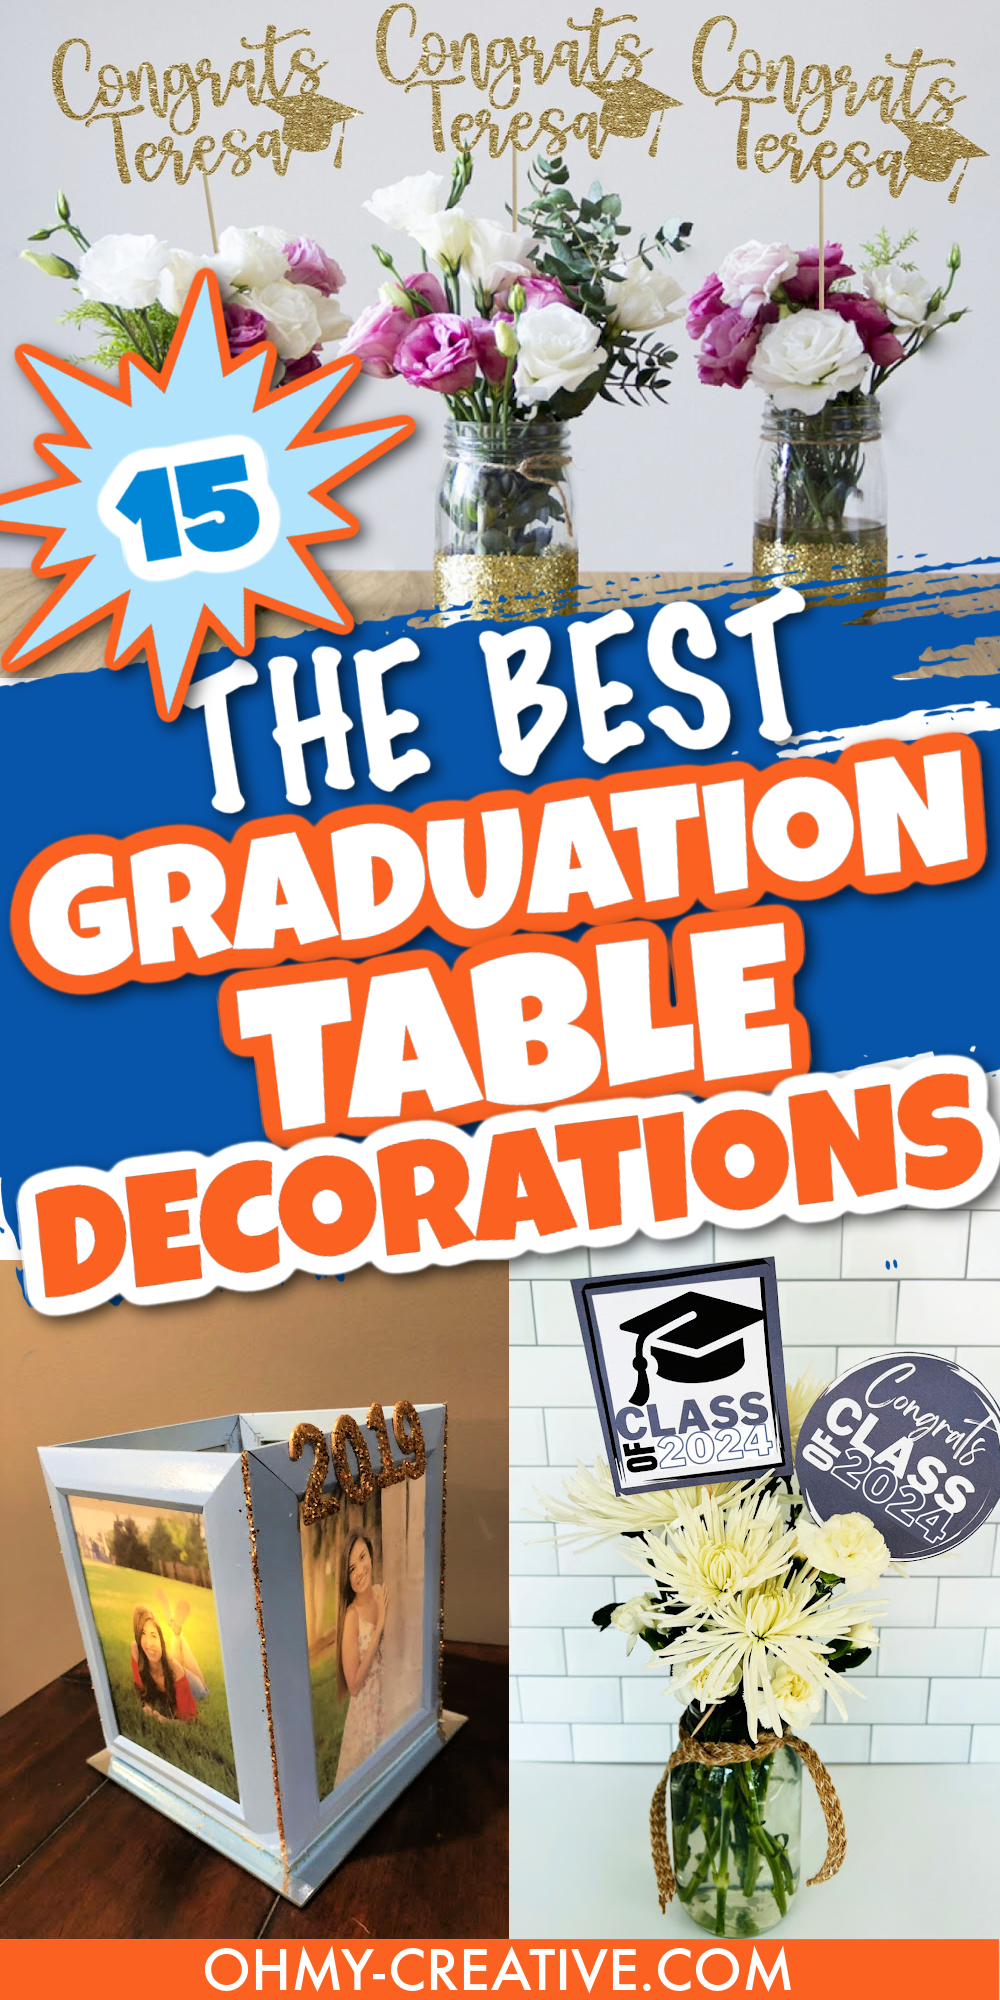 The Best Graduation Table Decorations